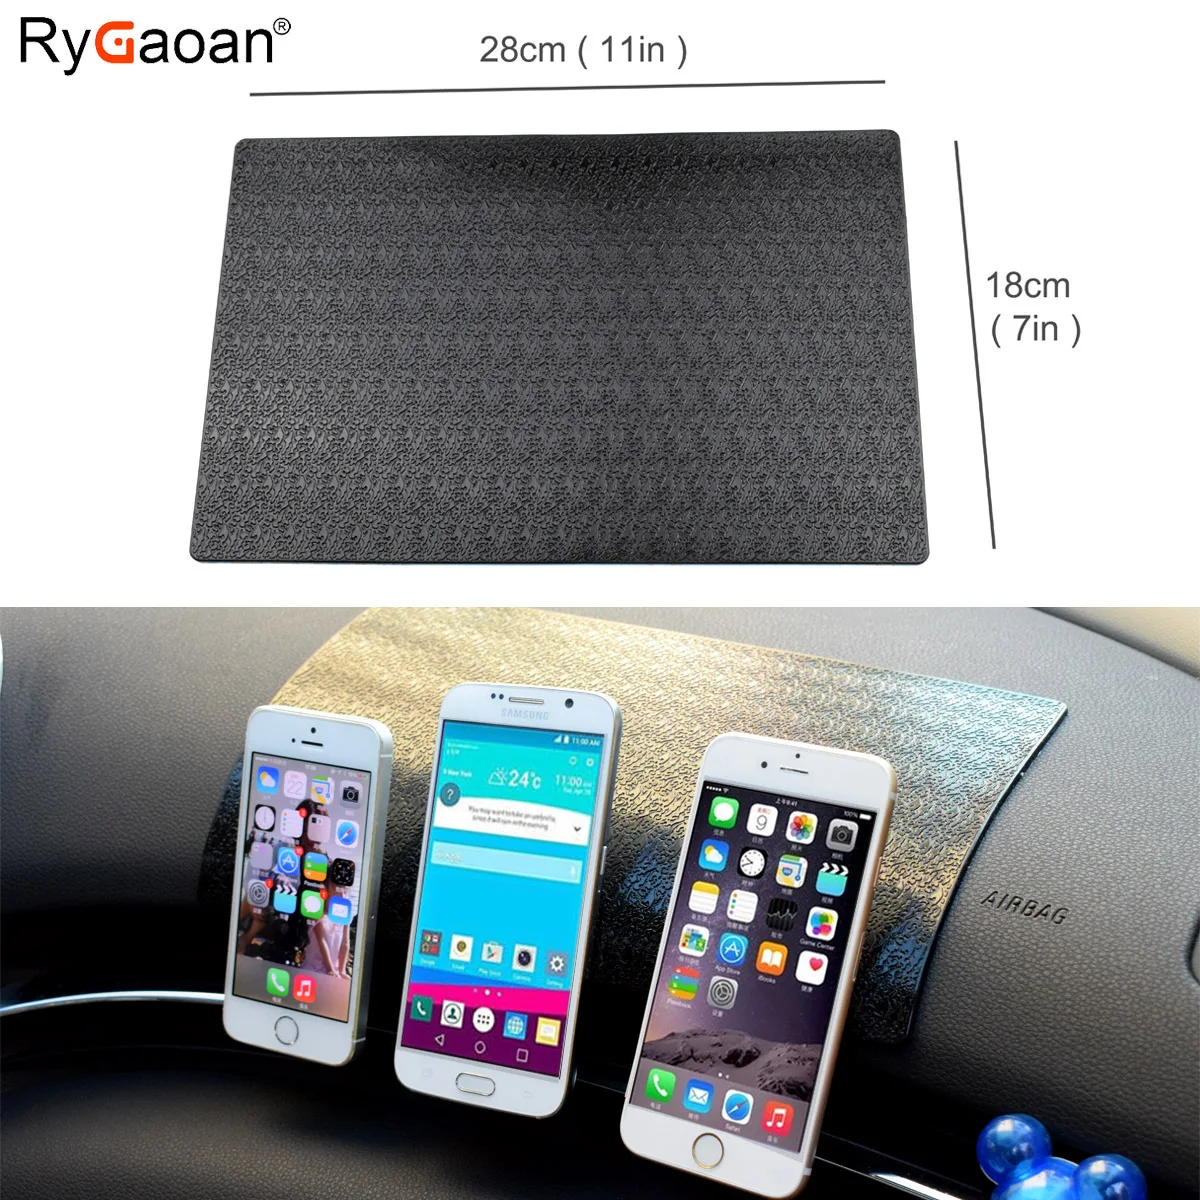 

RyGaoan 28*18cm (11*7in) Super Sticky Big Size Car Dashboard Magic Anti Slip Mat Non-slip Sticky Pad for Ornament Monitor